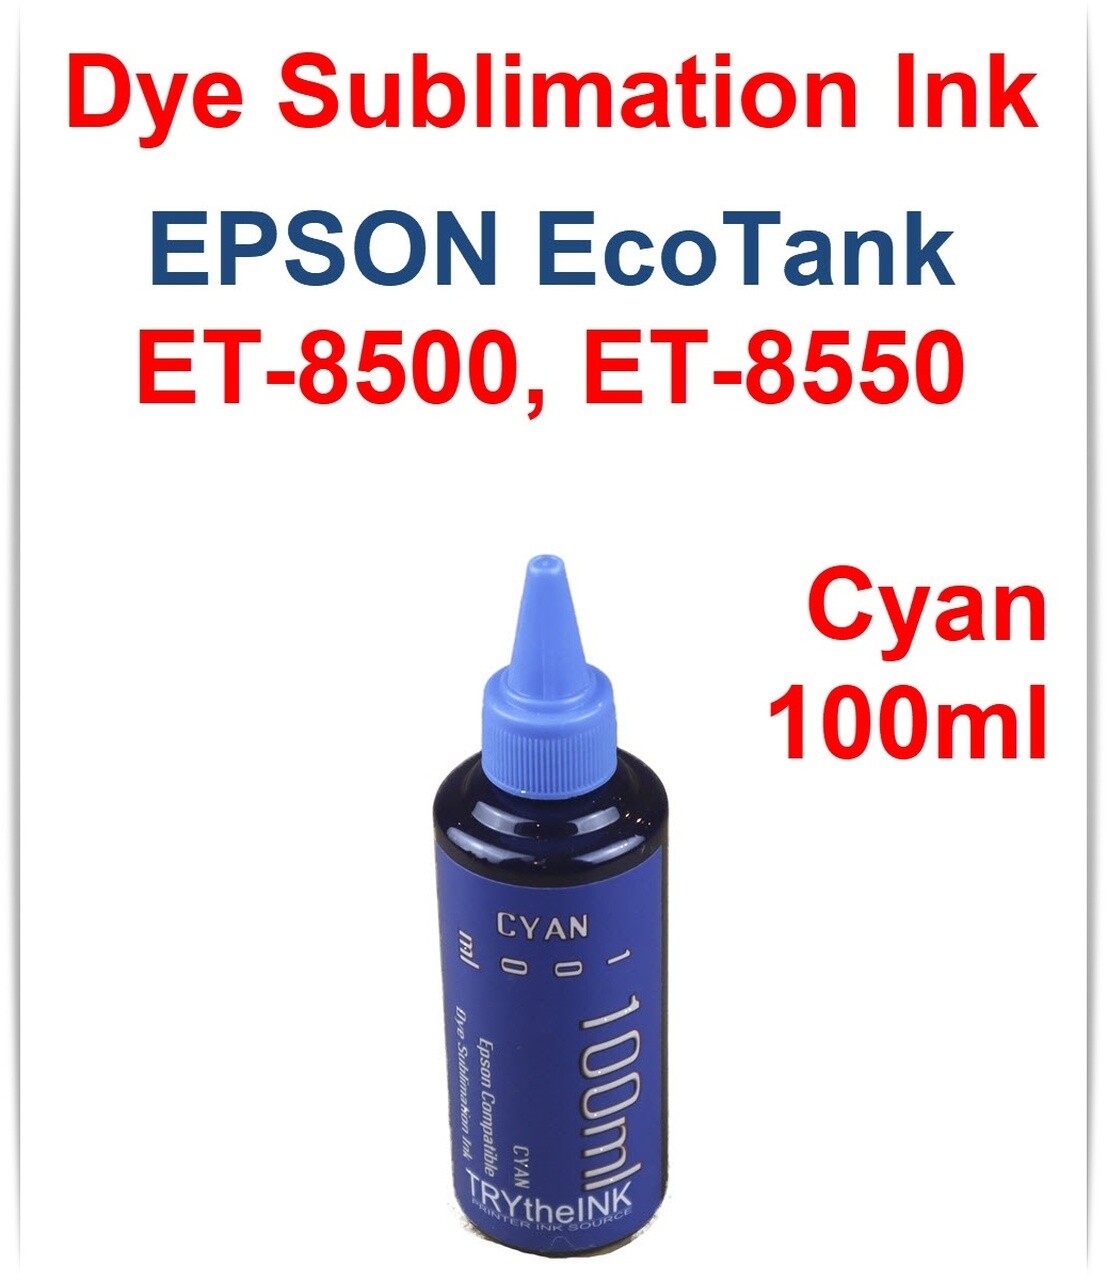 Cyan Dye Sublimation Ink 100ml bottle for EPSON EcoTank ET-8500 ET-8550 printers